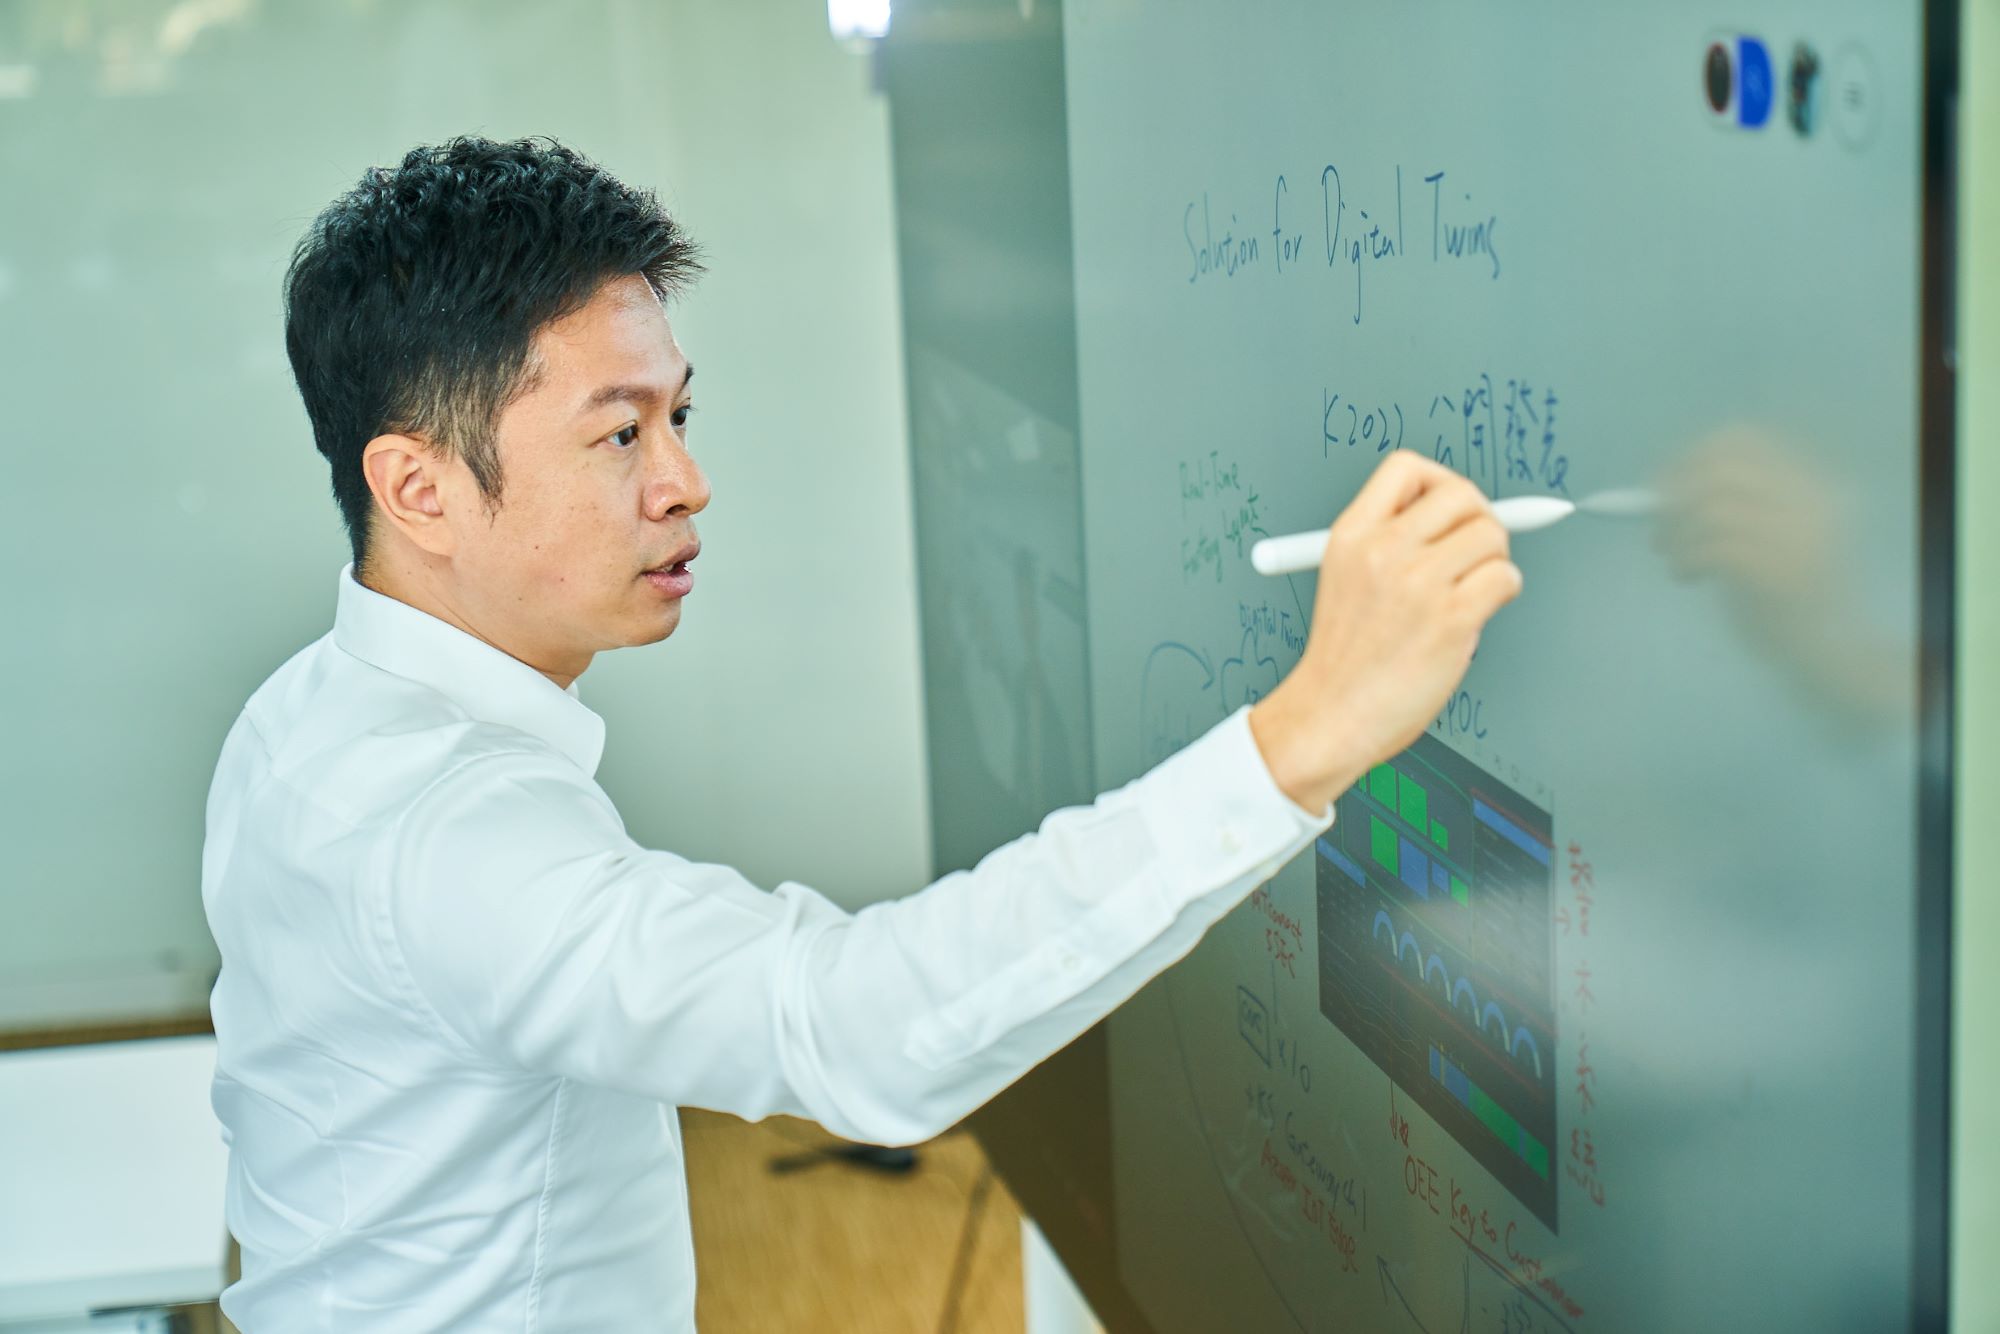 Jim Chen shown writing on a whiteboard. 